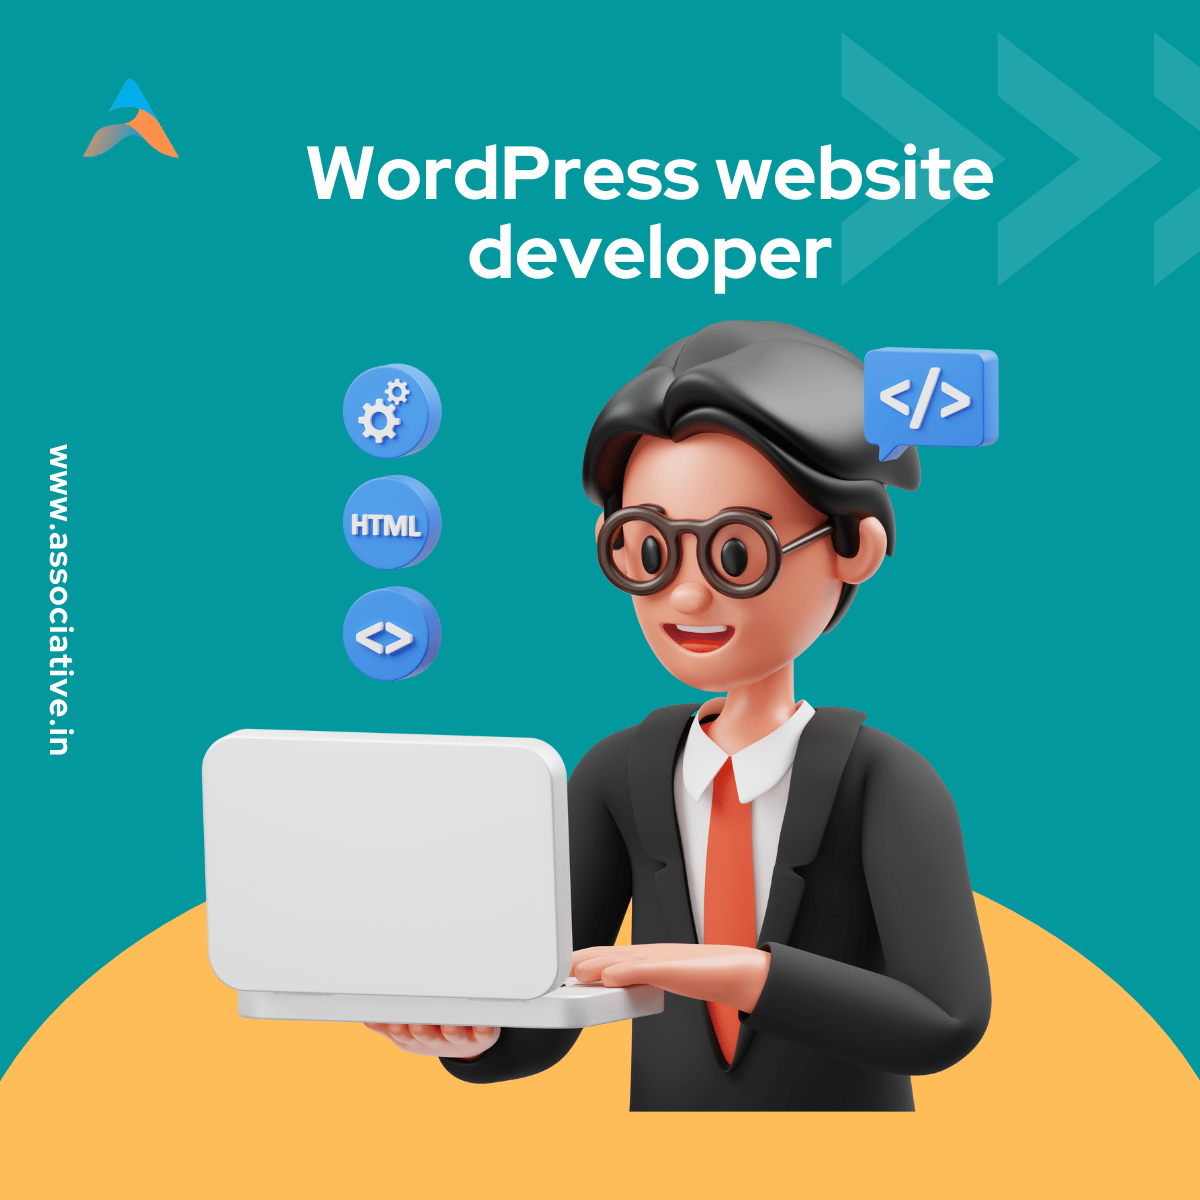 WordPress website developer